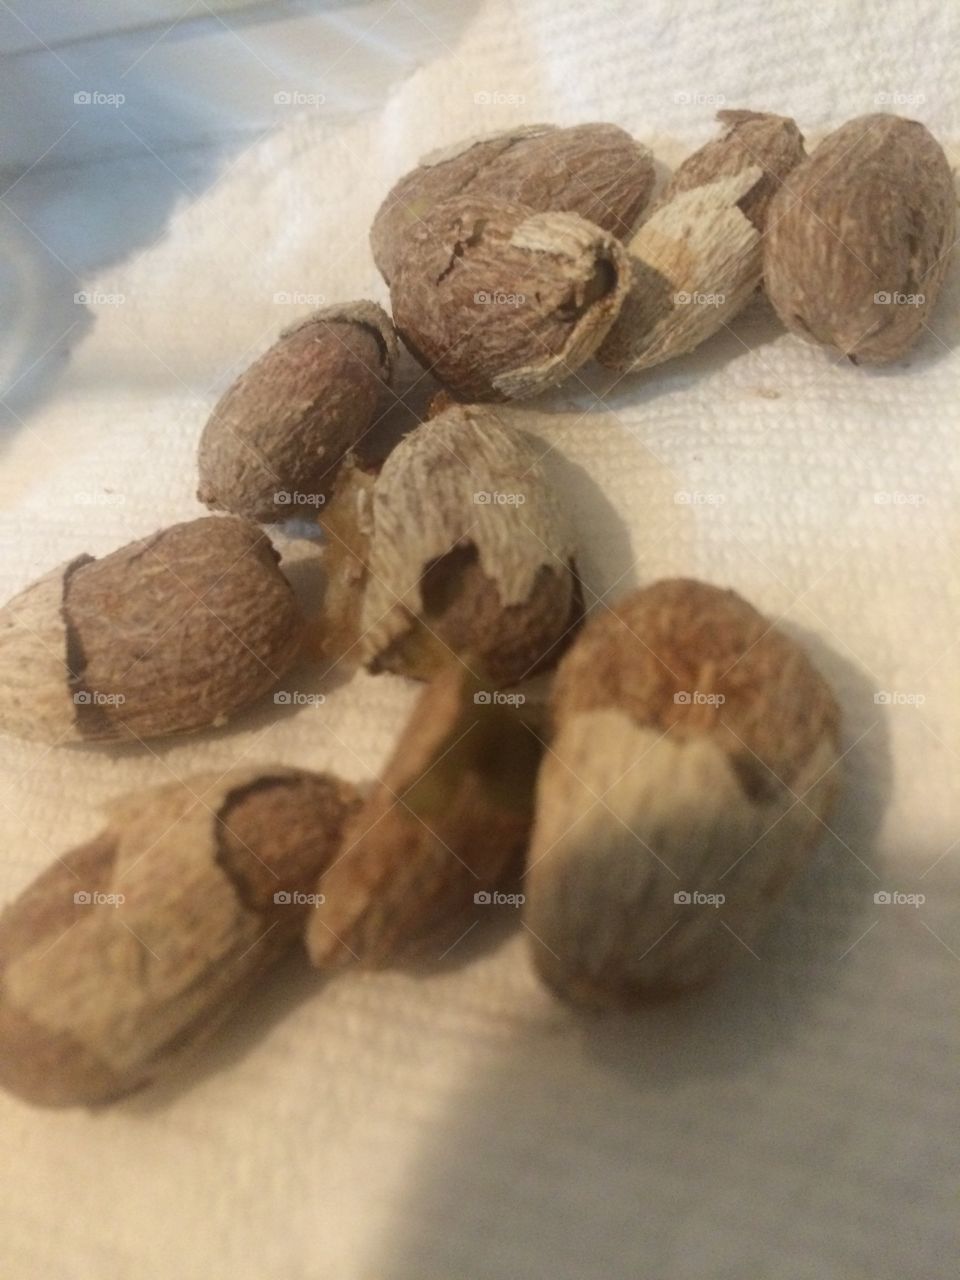 Lychee seeds